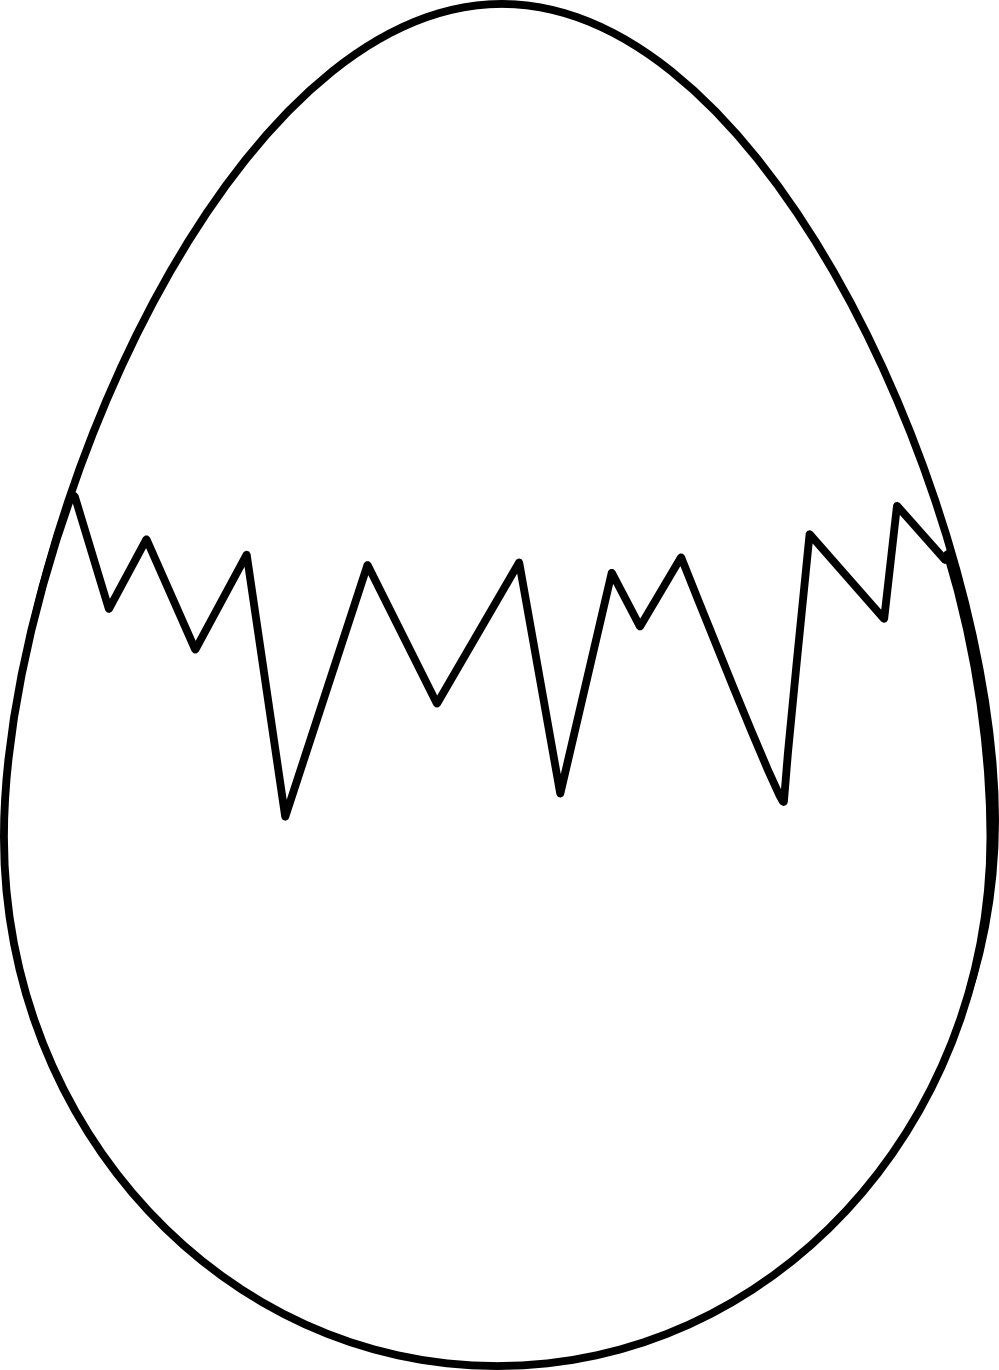 yolk clipart black and white